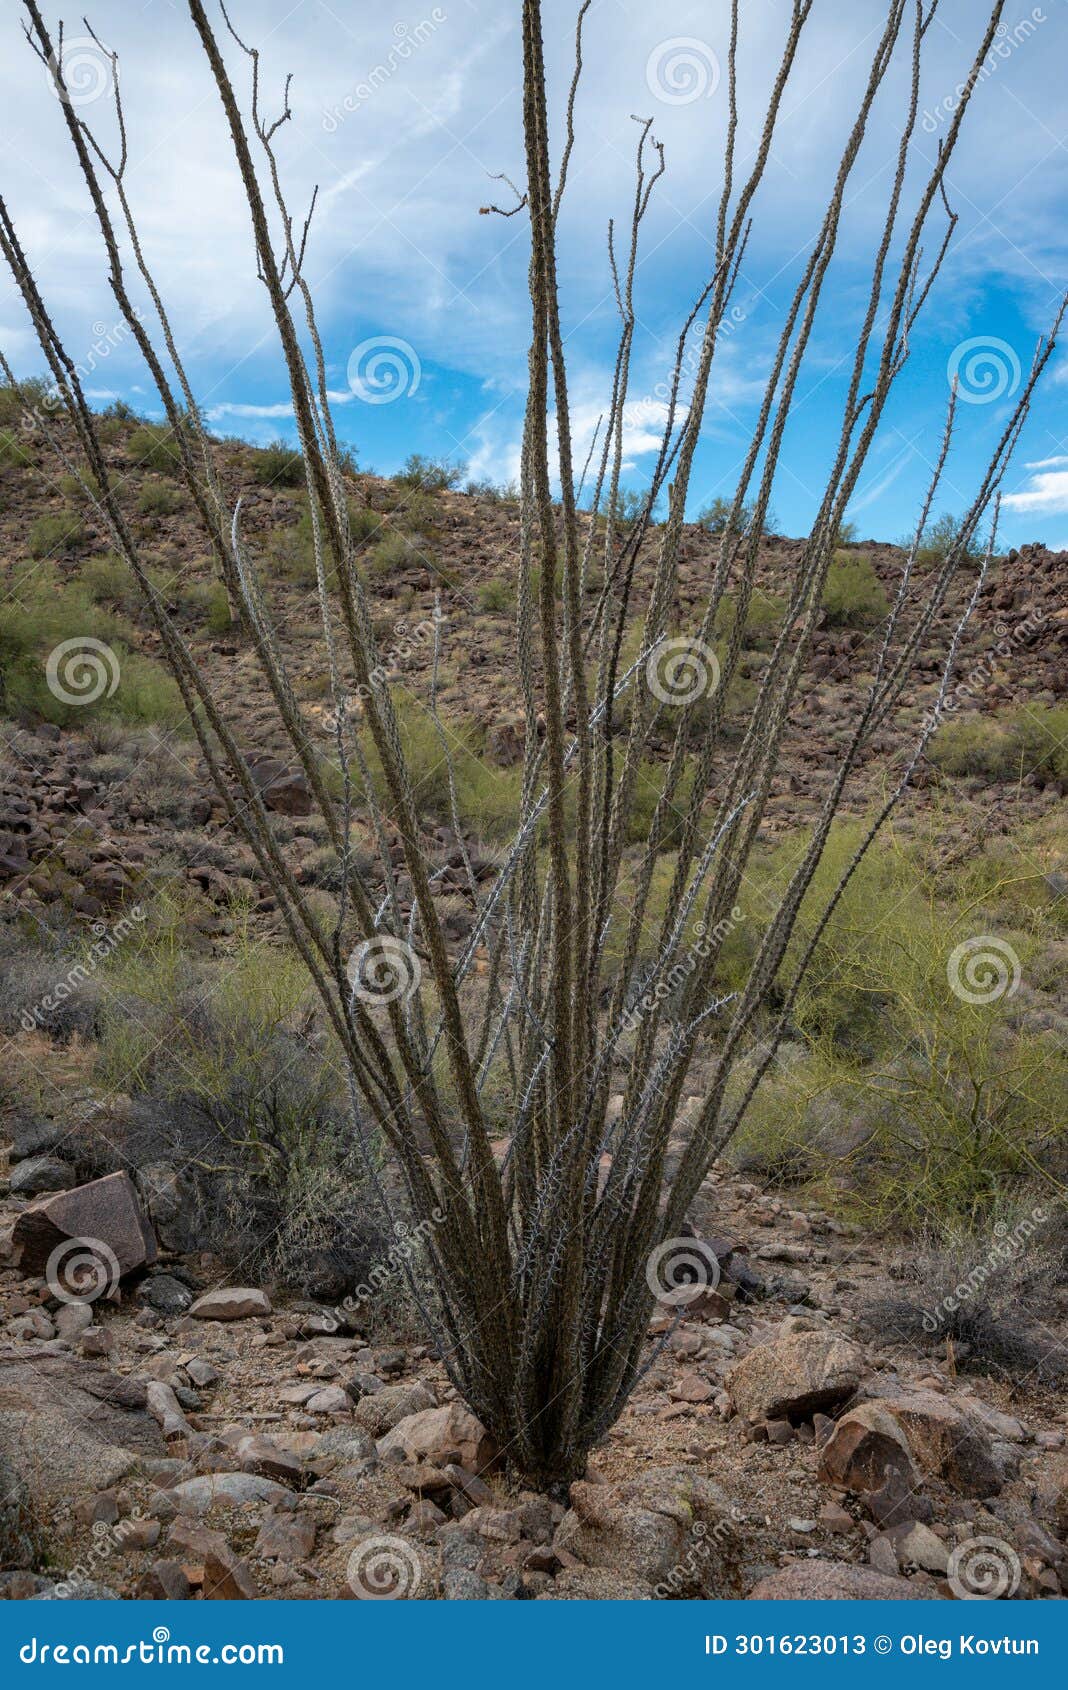 dead cactus lying on the ground ocotillo plant (fouquieria splendens) in the desert of arizona